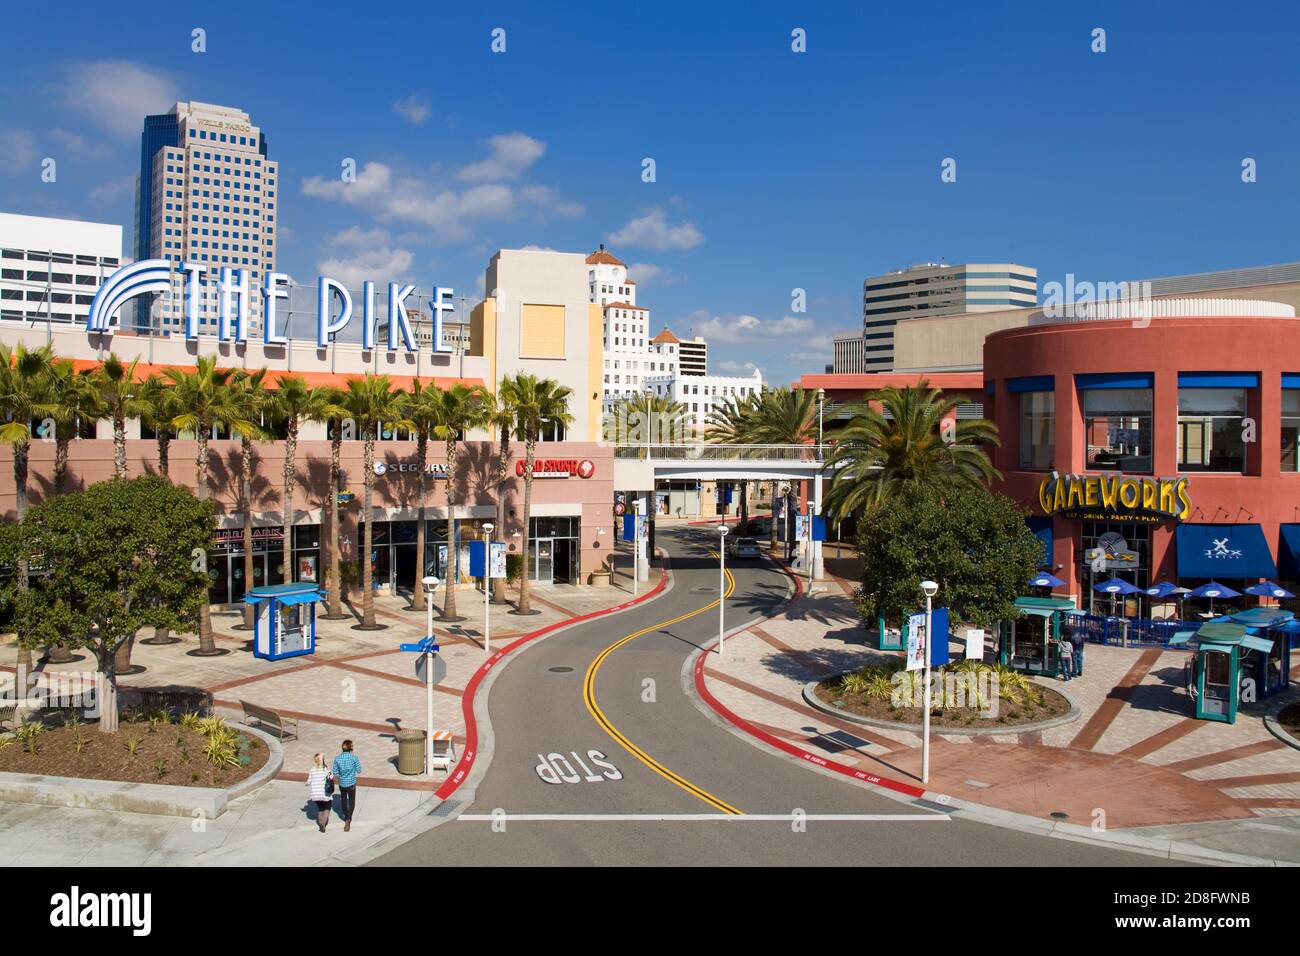 The Pike Mall, Long Beach, Los Angeles, California, USA Stock Photo